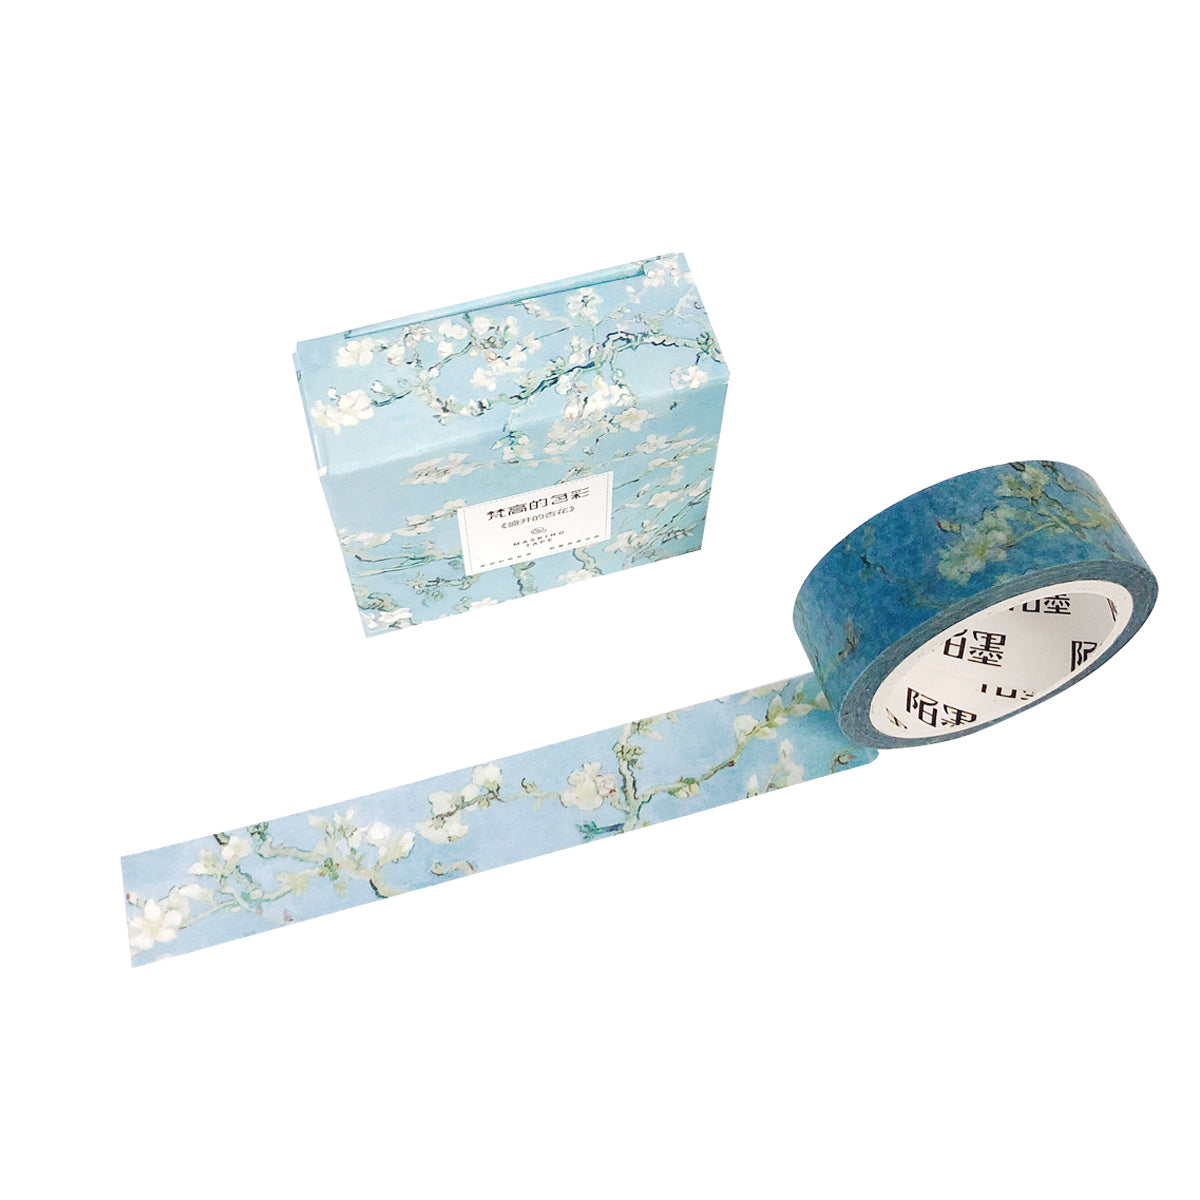 Wrapables Van Gogh Inspired Washi Masking Tape